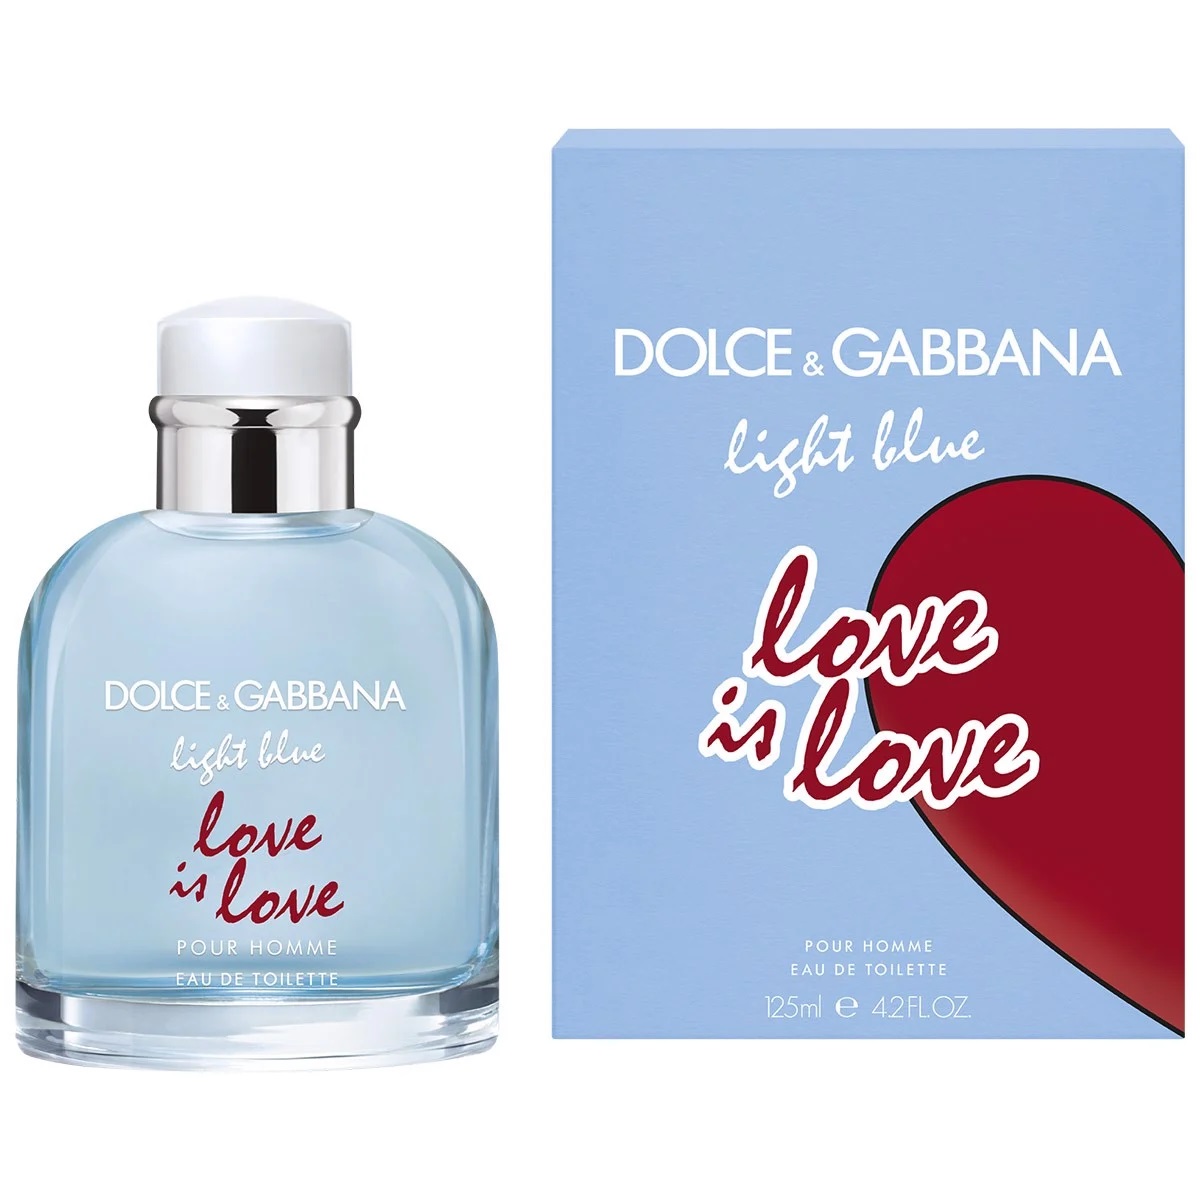  NƯỚC HOA NAM DOLCE & GABBANA LIGHT BLUE LOVE IS LOVE POUR HOMME 4